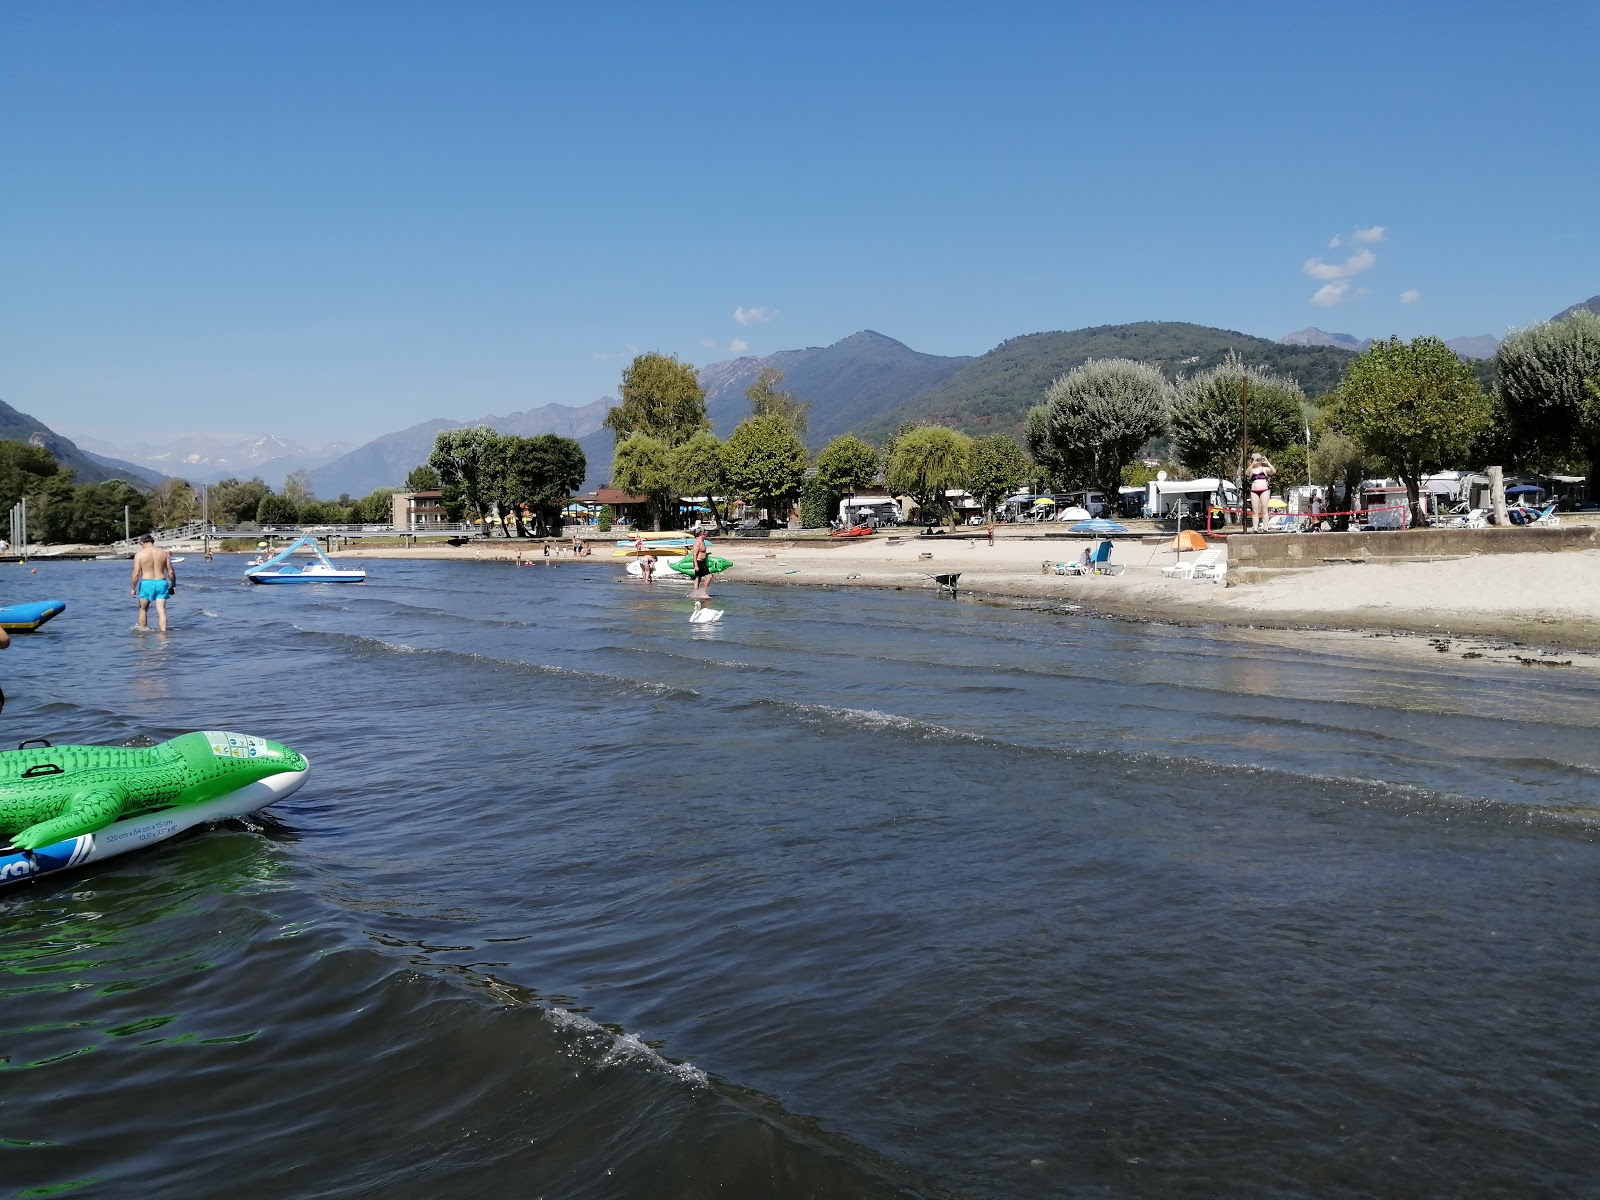 Foto de Spiaggia Isolino - lugar popular entre os apreciadores de relaxamento